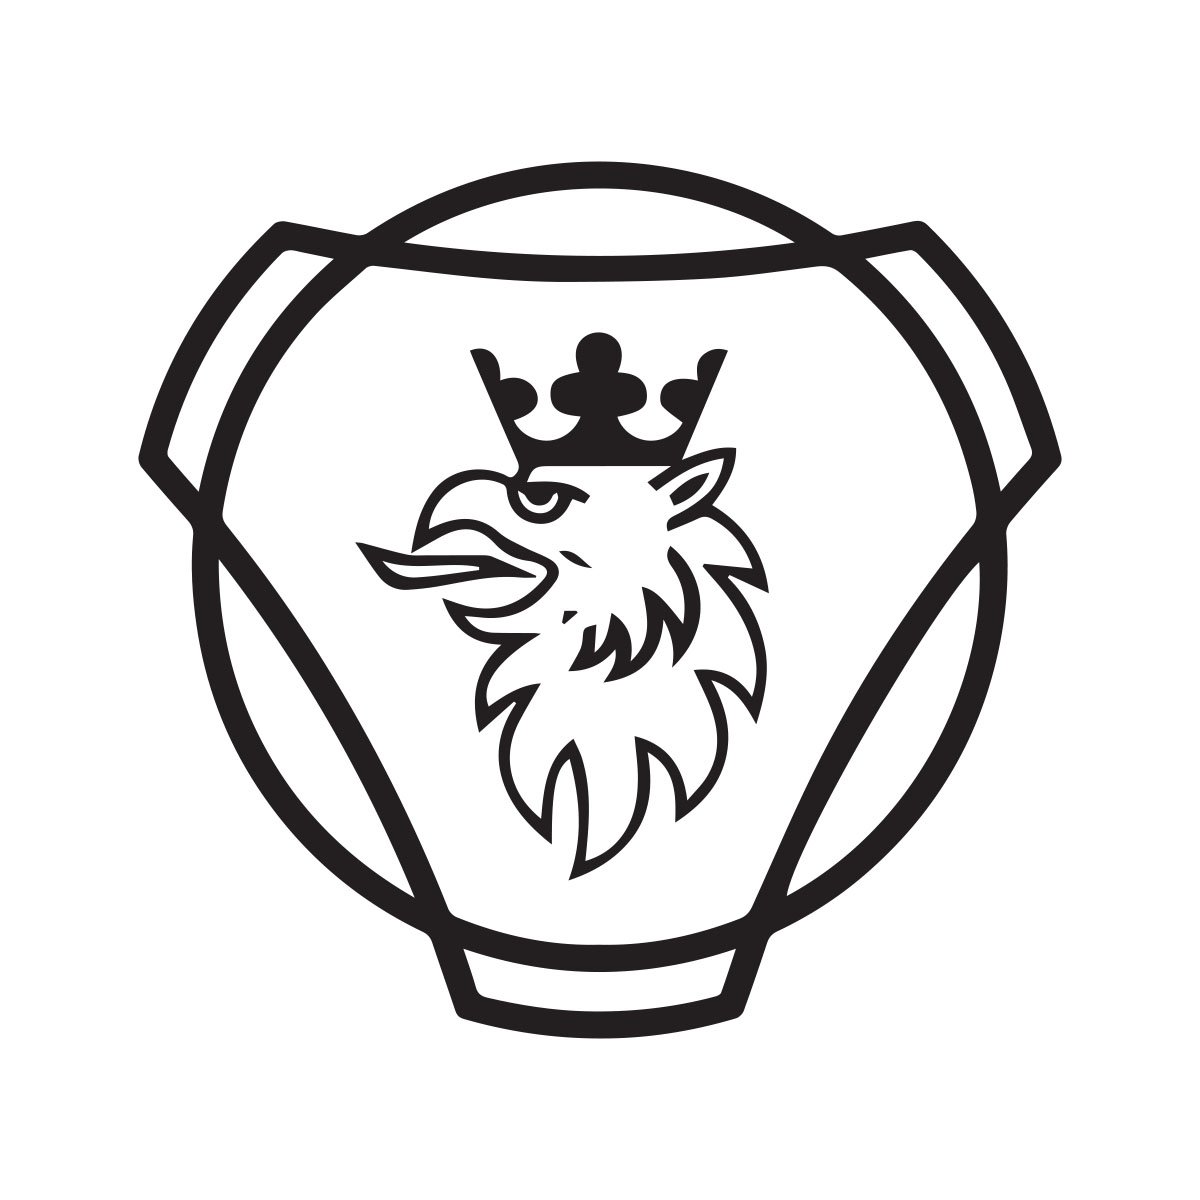 scania vabis logo